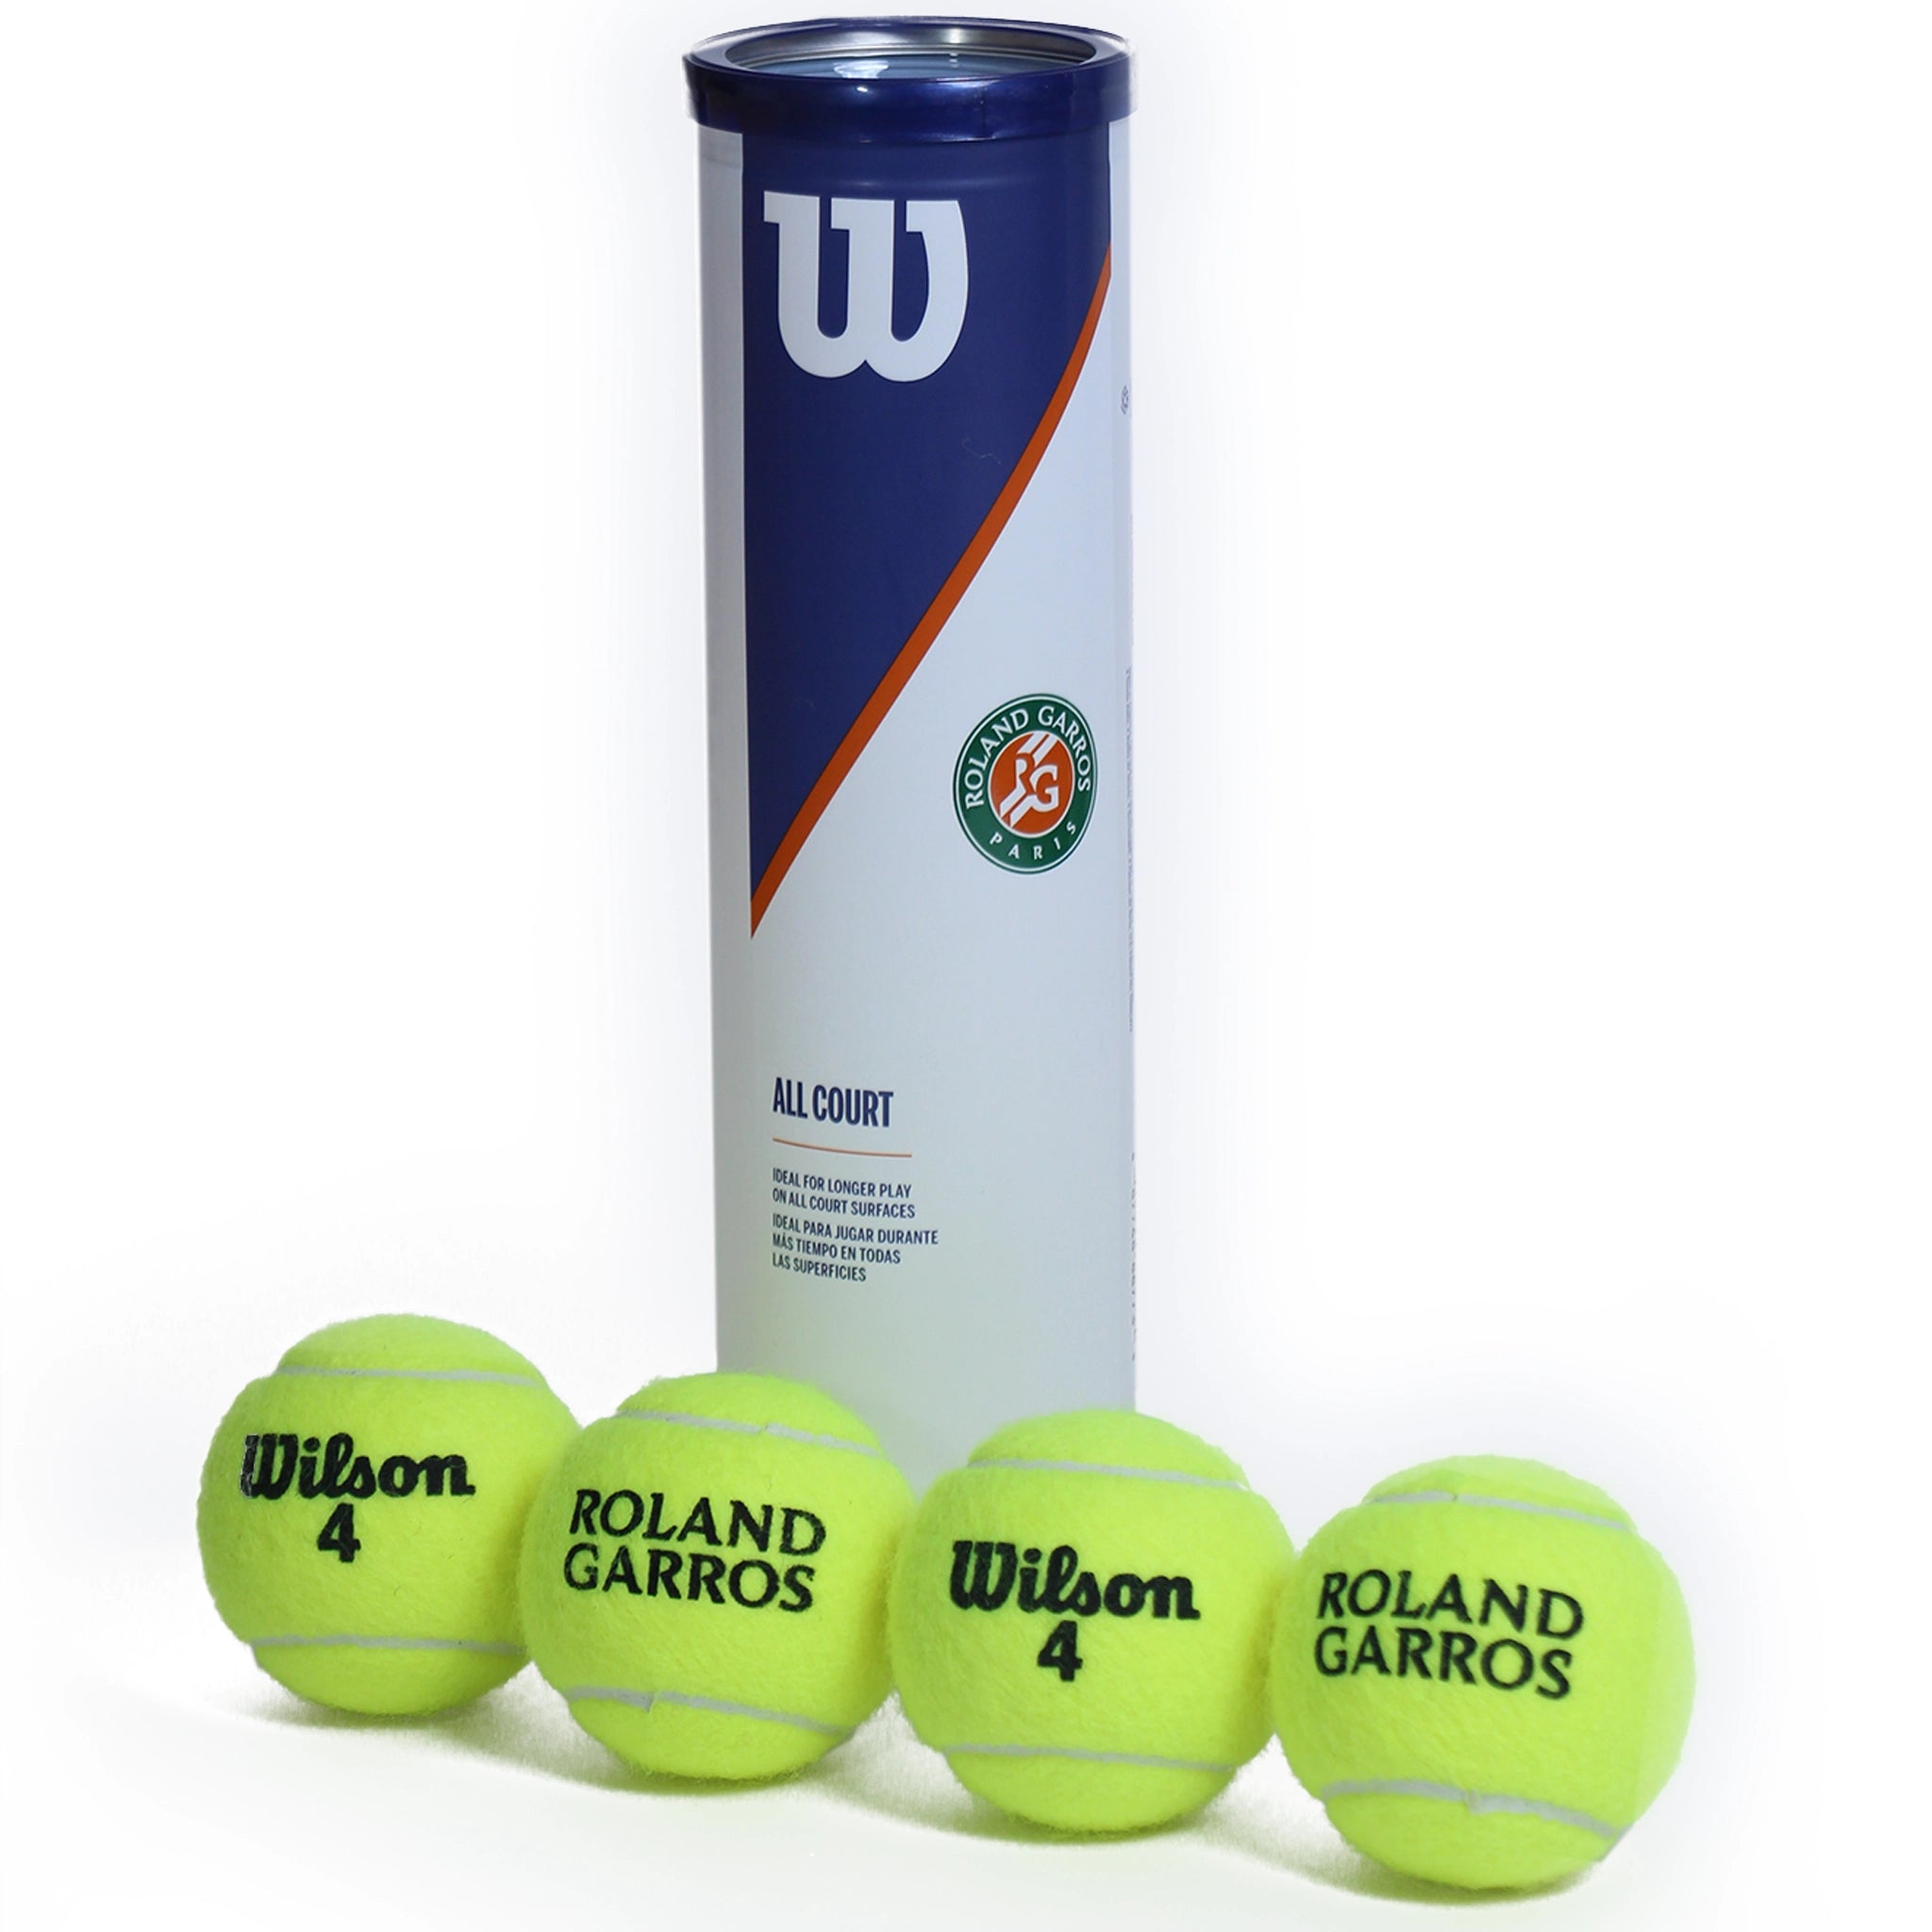 Sports bra - Tennis Courts - Tennis Theme - Tennis Ball - Tennis